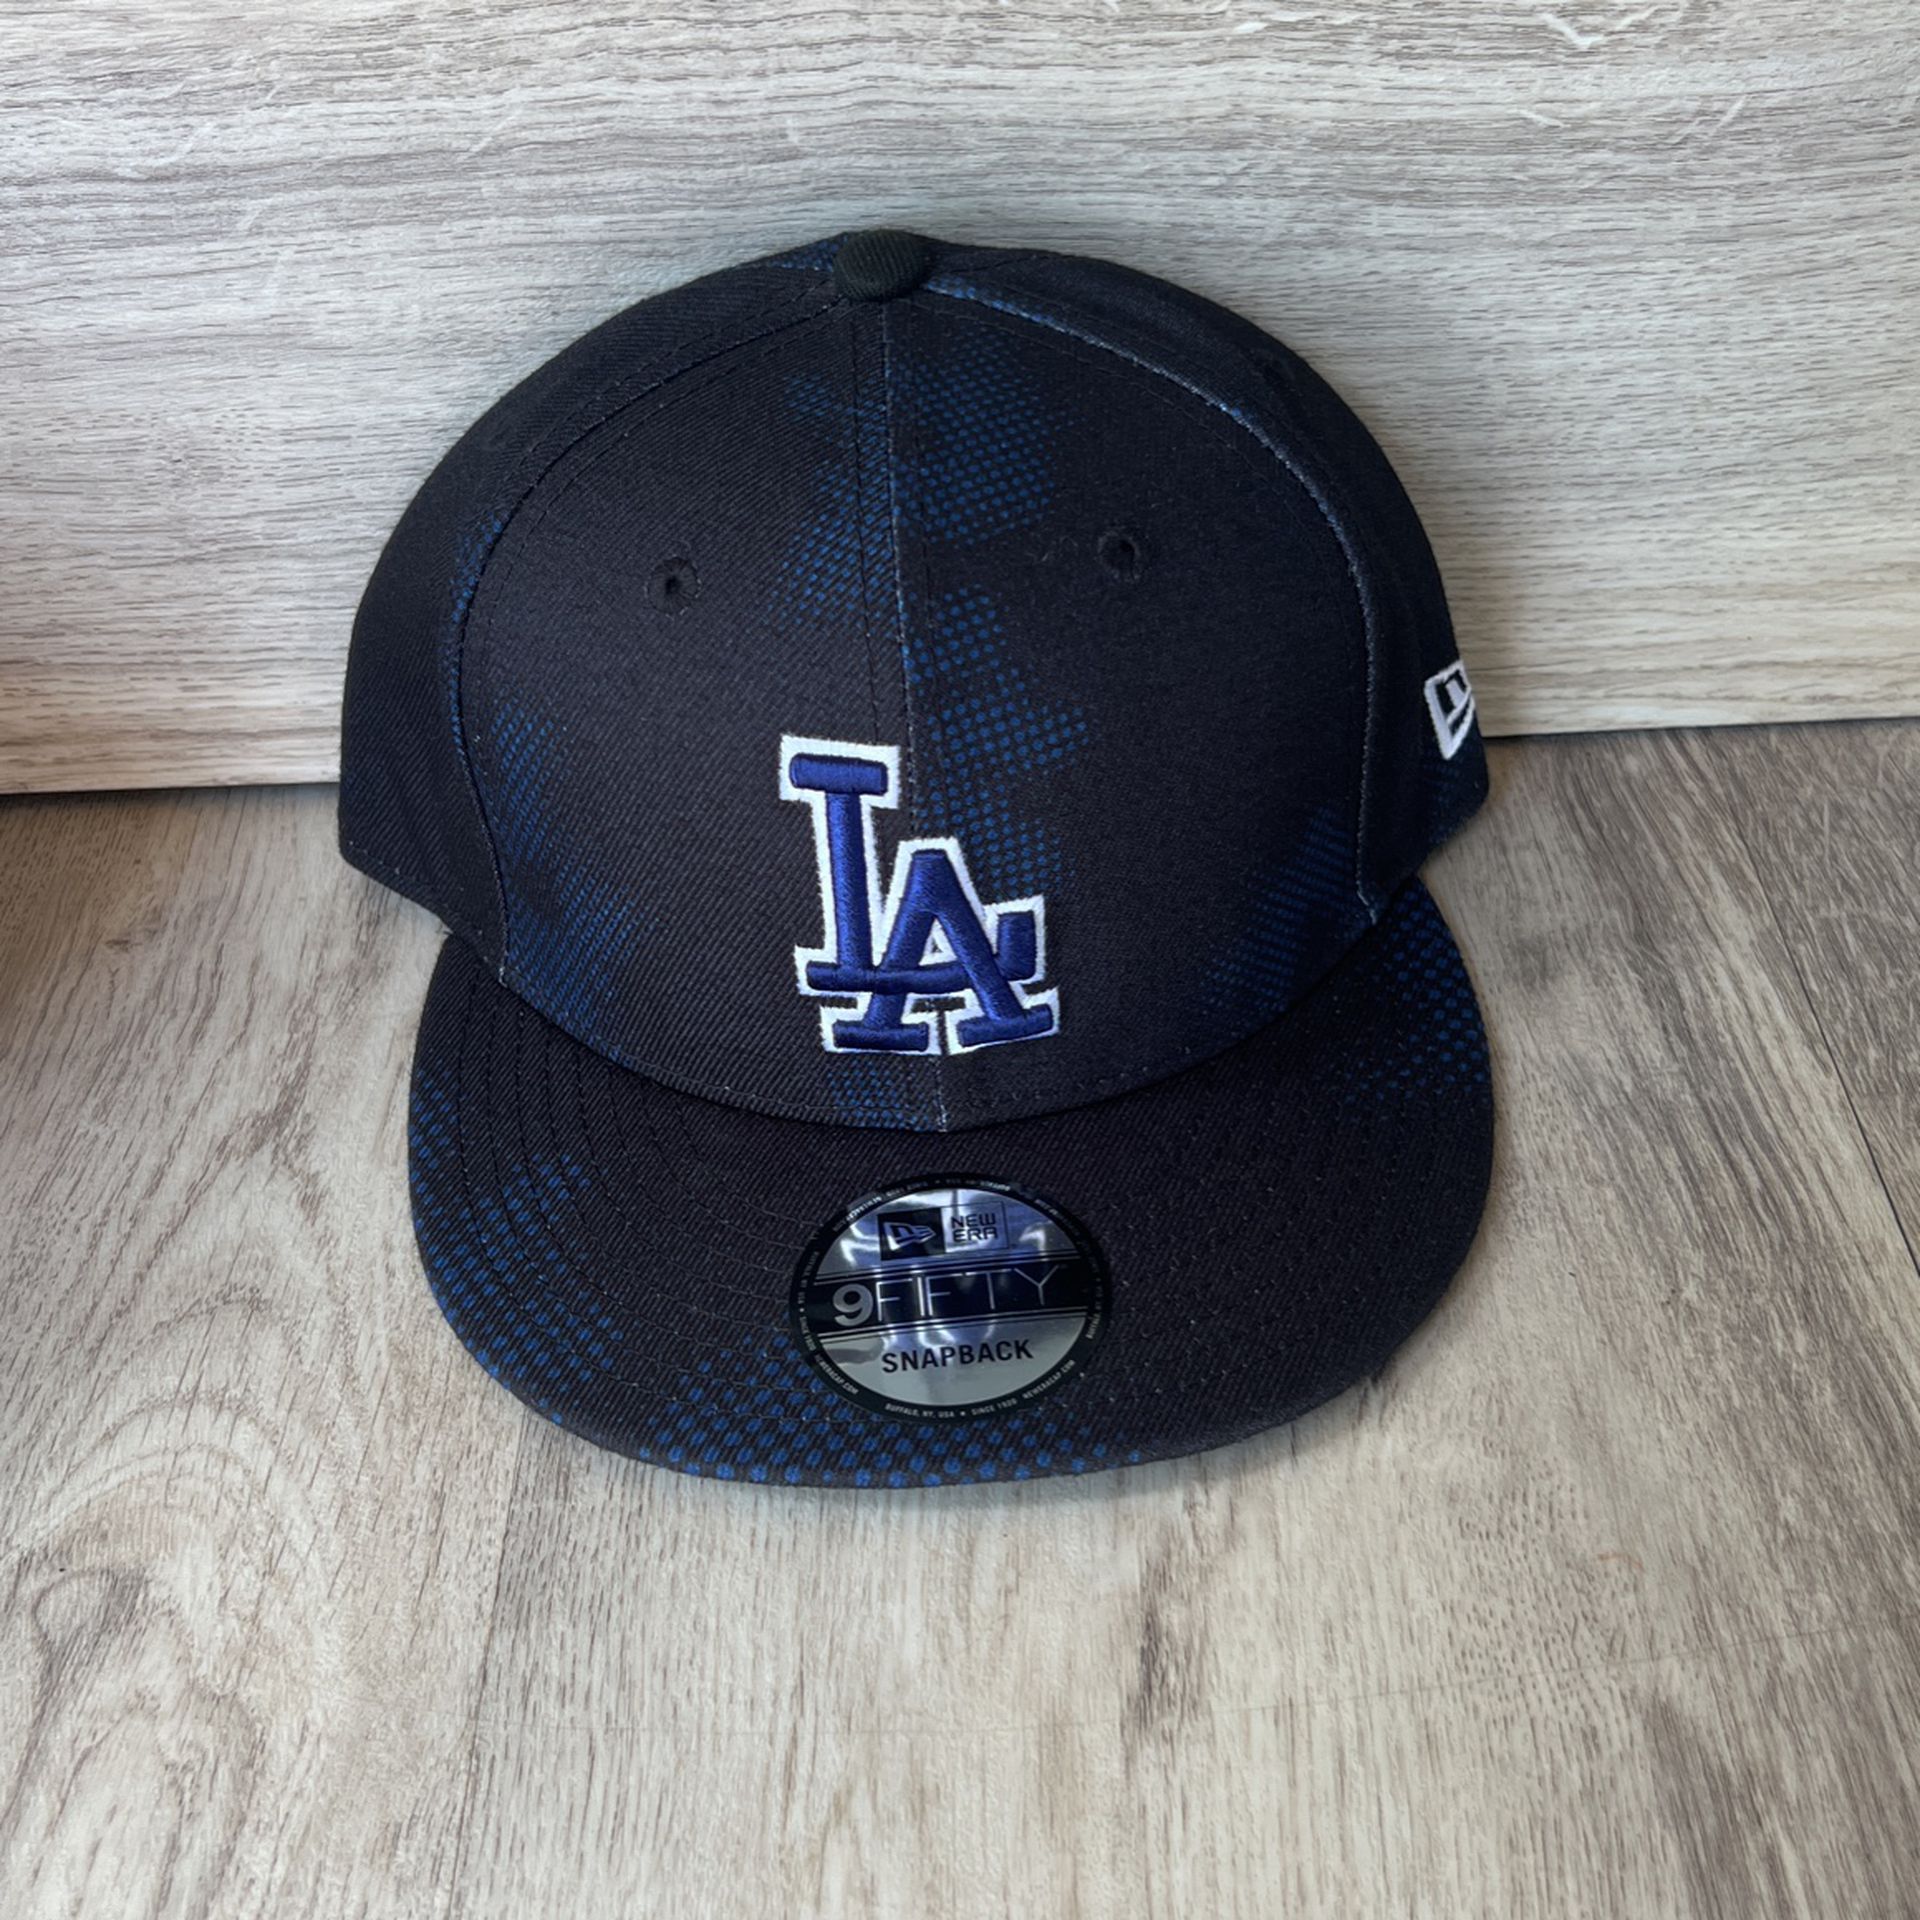 Los Angeles Dodgers adjustable hat 🧢 